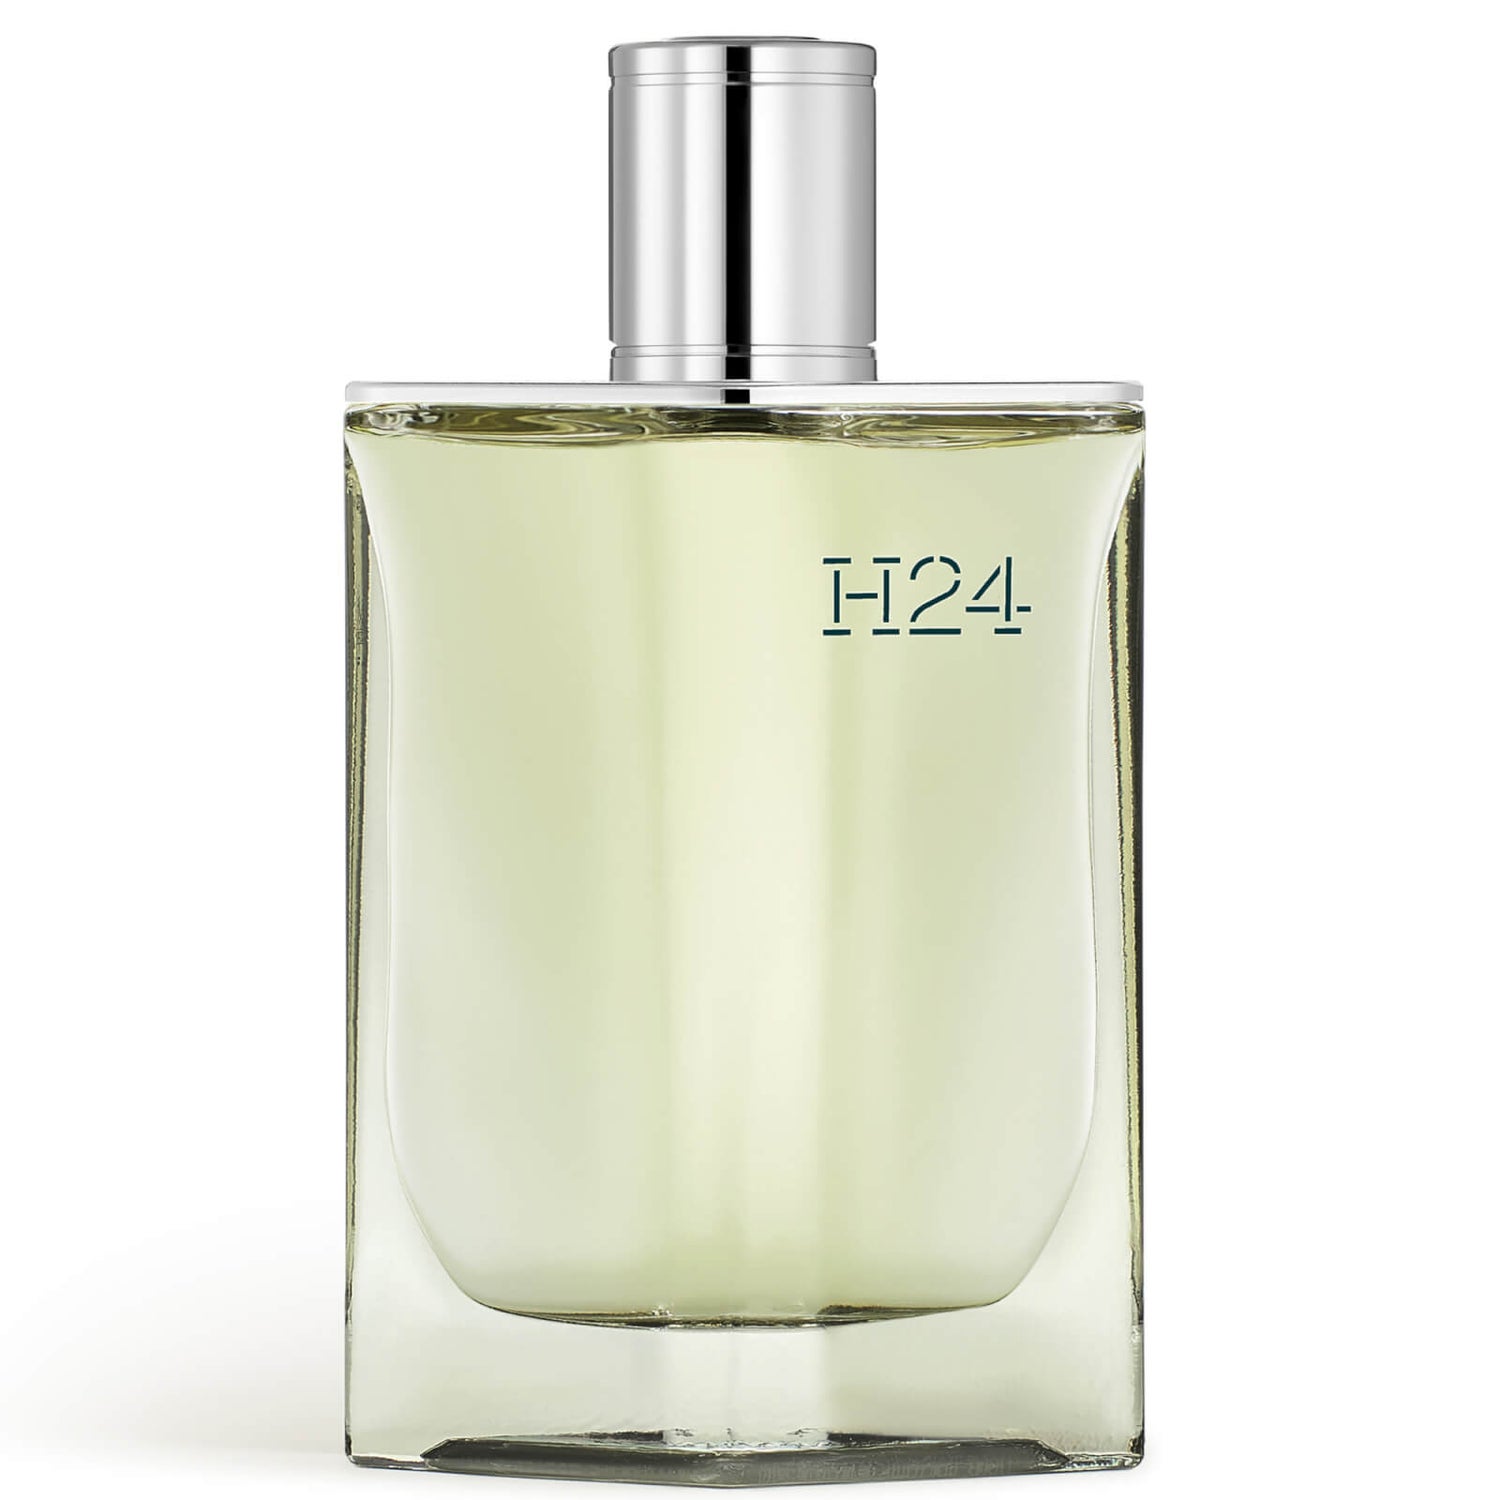 Hermès H24 Eau de Parfum Refillable Natural Spray 100ml - LOOKFANTASTIC